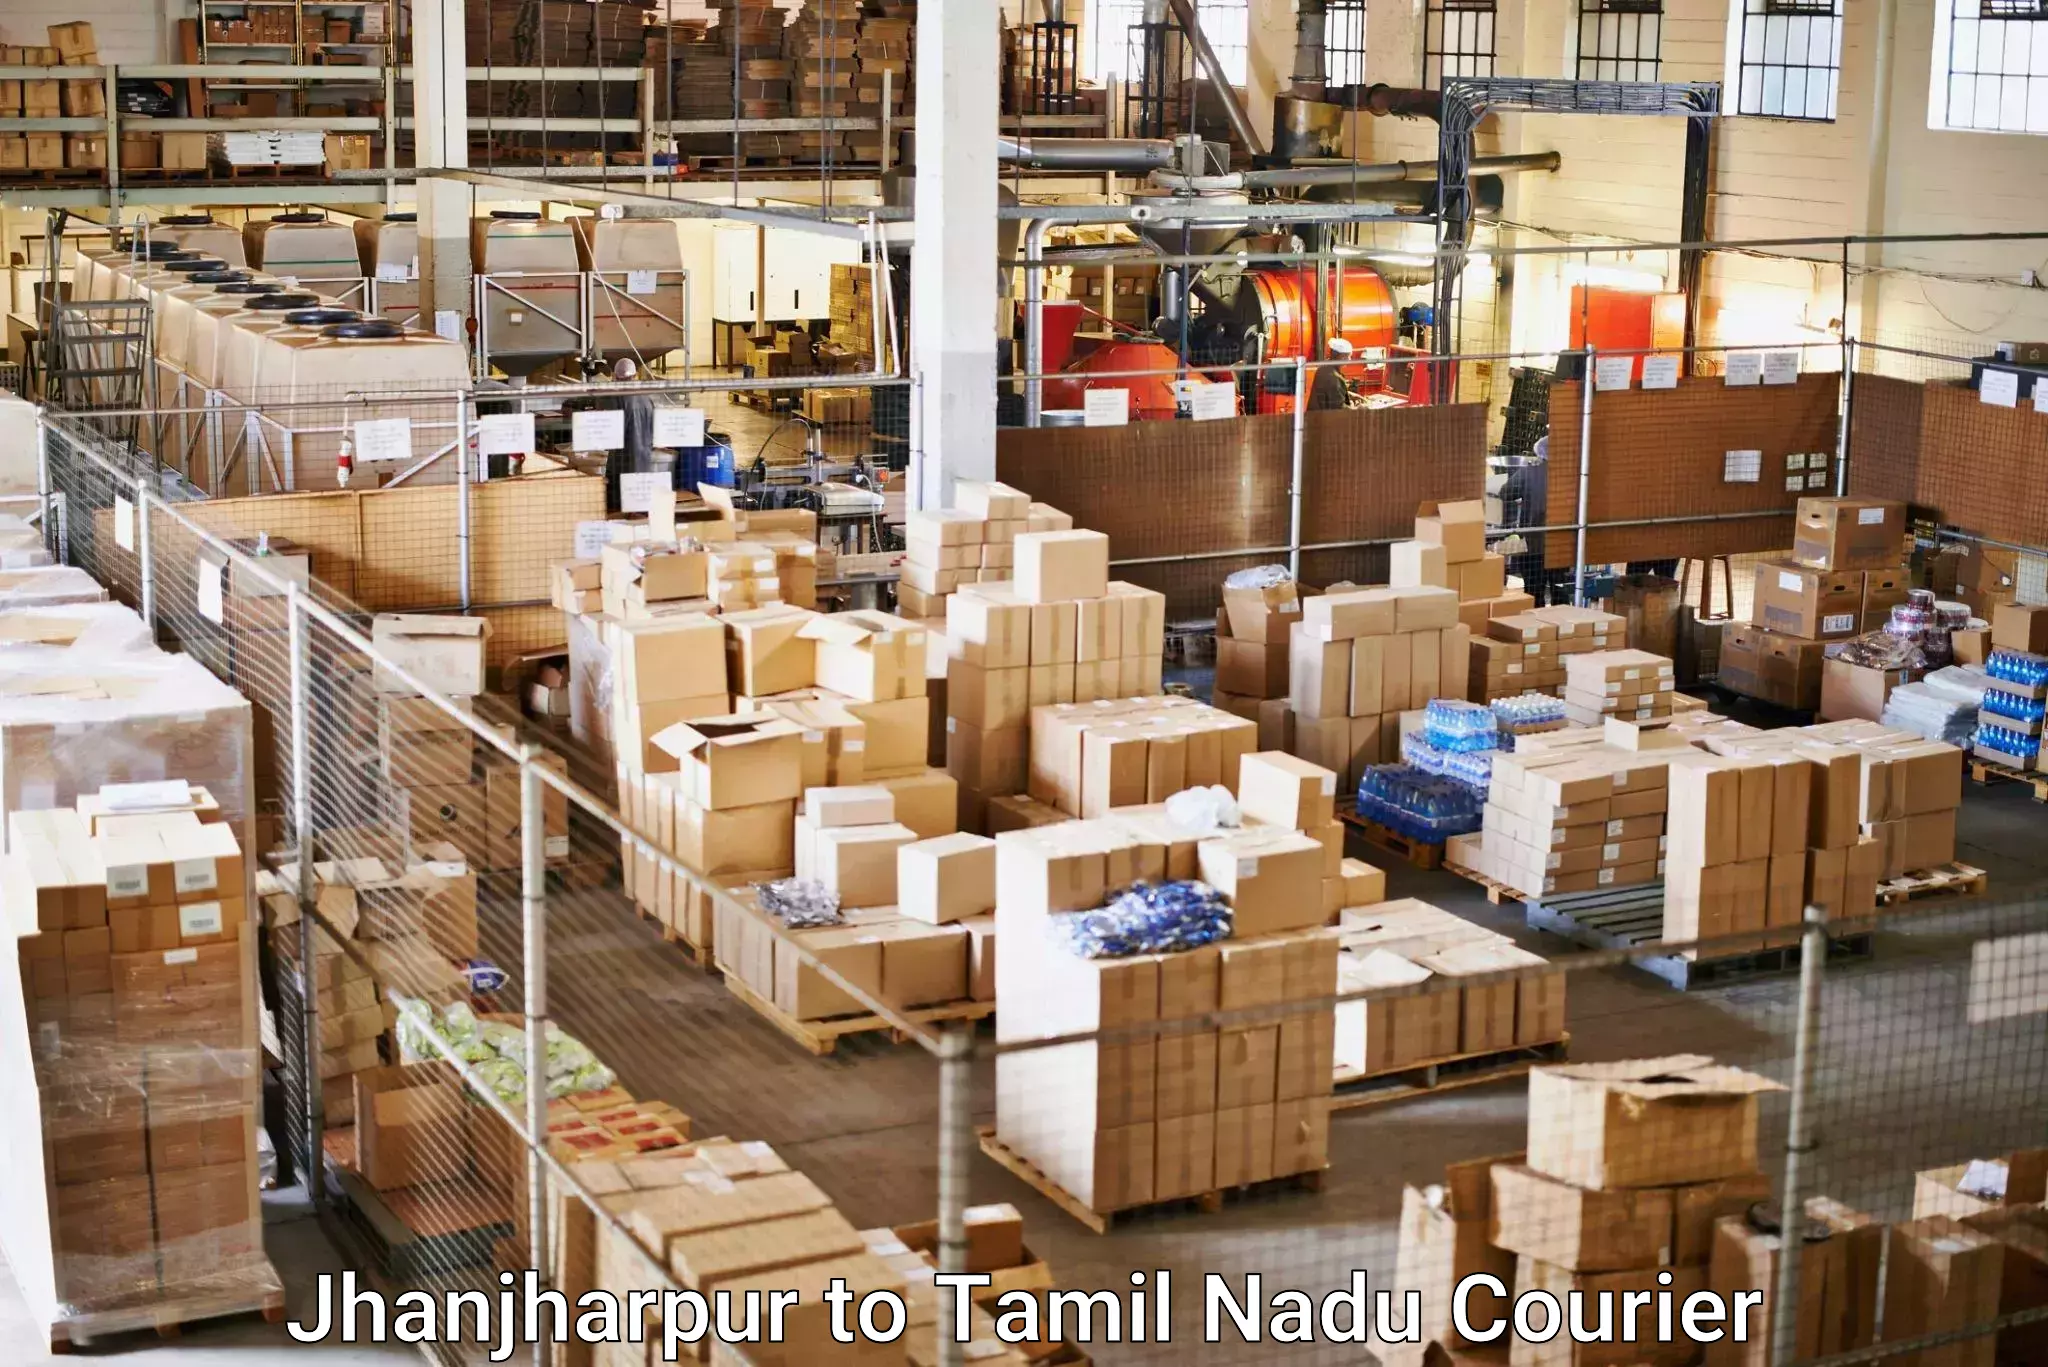 Nationwide shipping capabilities Jhanjharpur to Chetpet